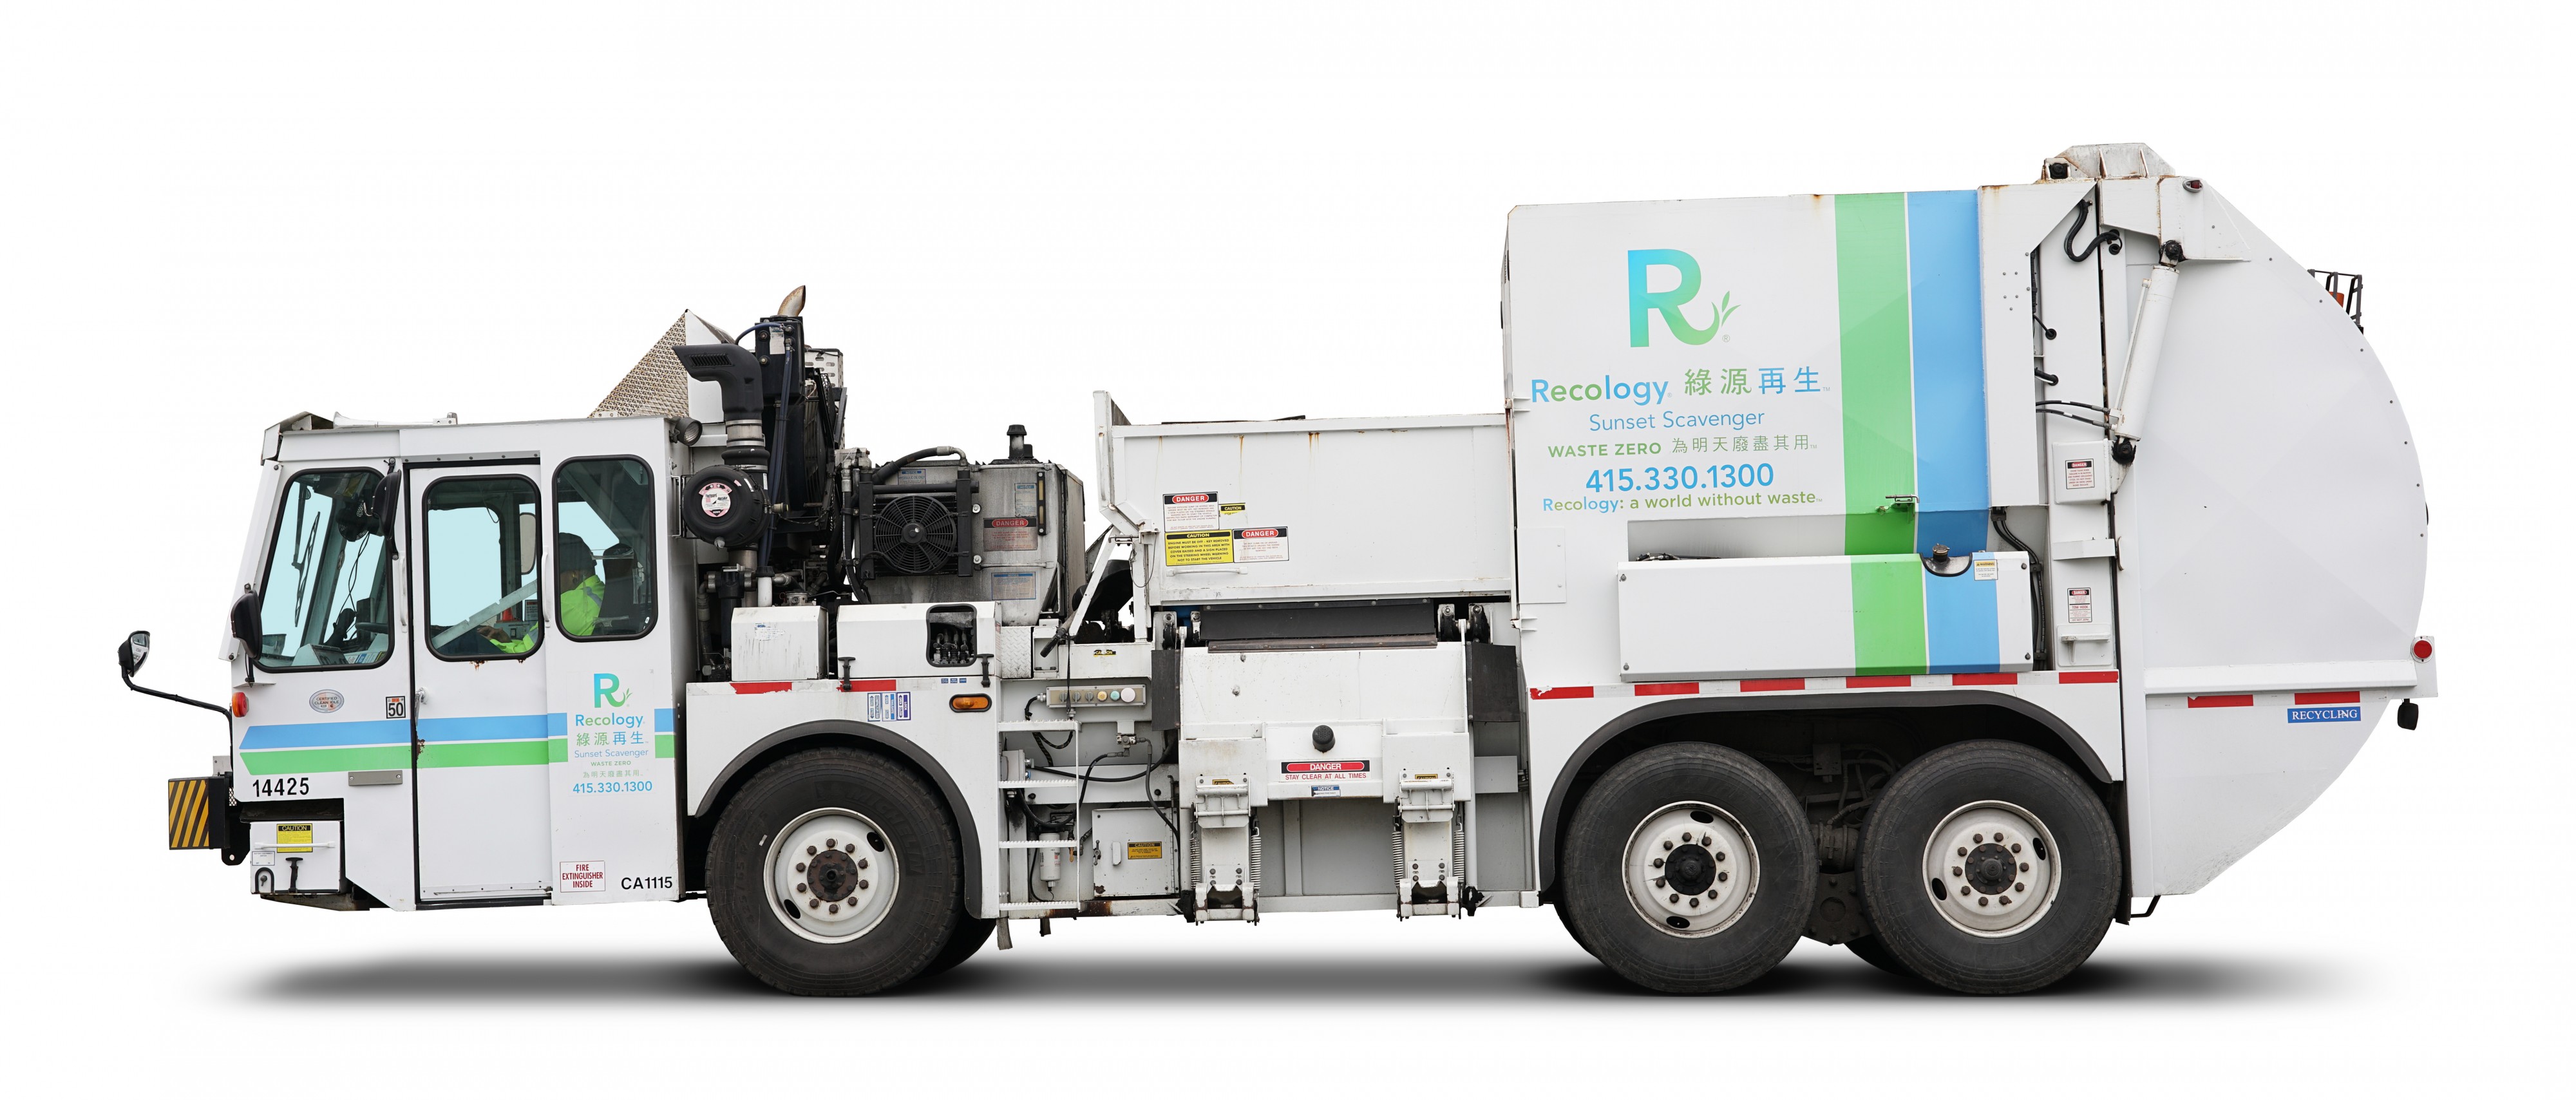 Recology Lodal Garbage Truck 14425 in San Francisco